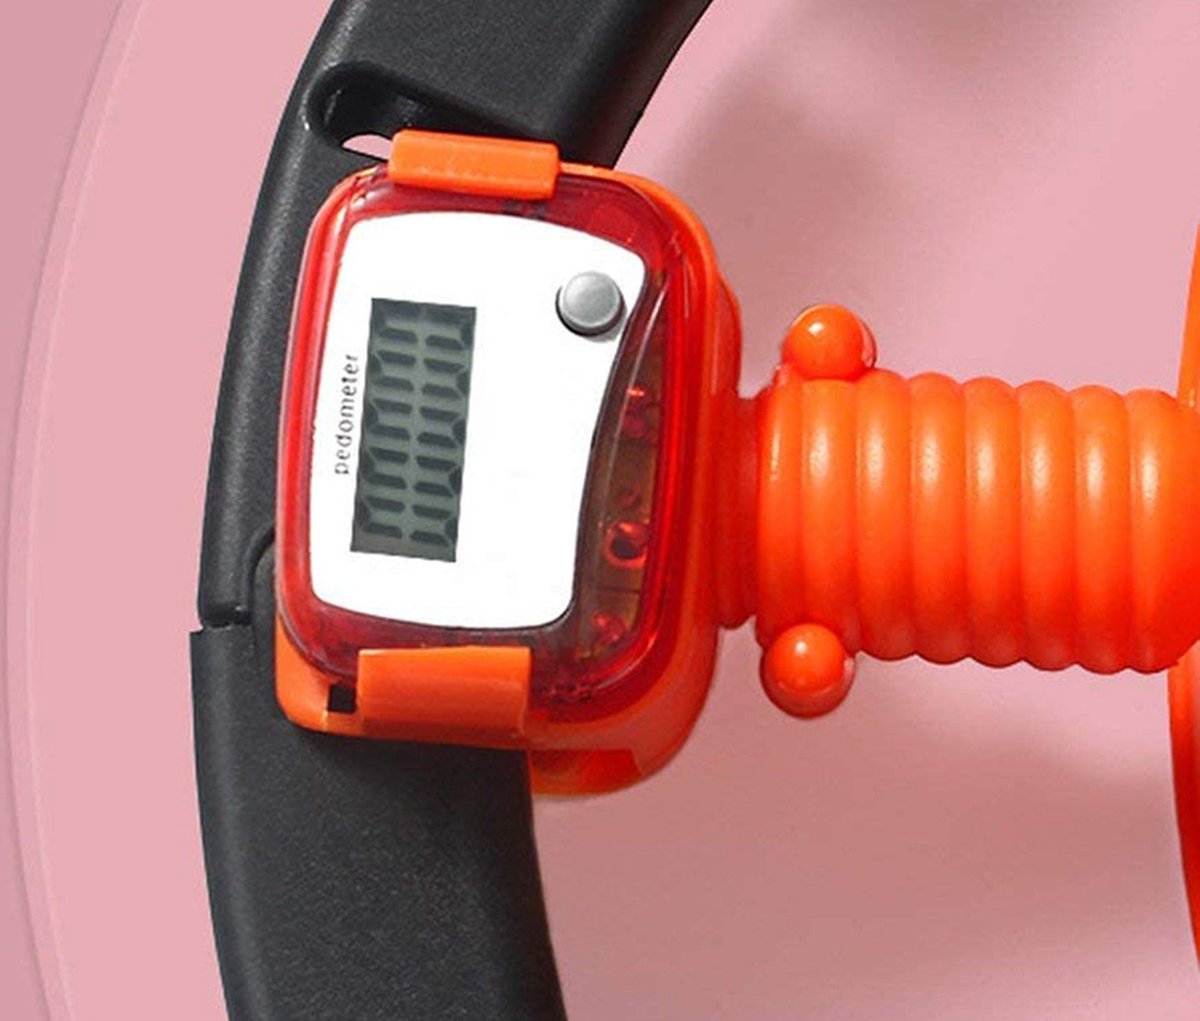 Ariko Hula Hoop Rad mit LED Zähler - Faltbar - Fitness Hula Hoop - Hula Hoop - Hula Hoop mit Gewicht